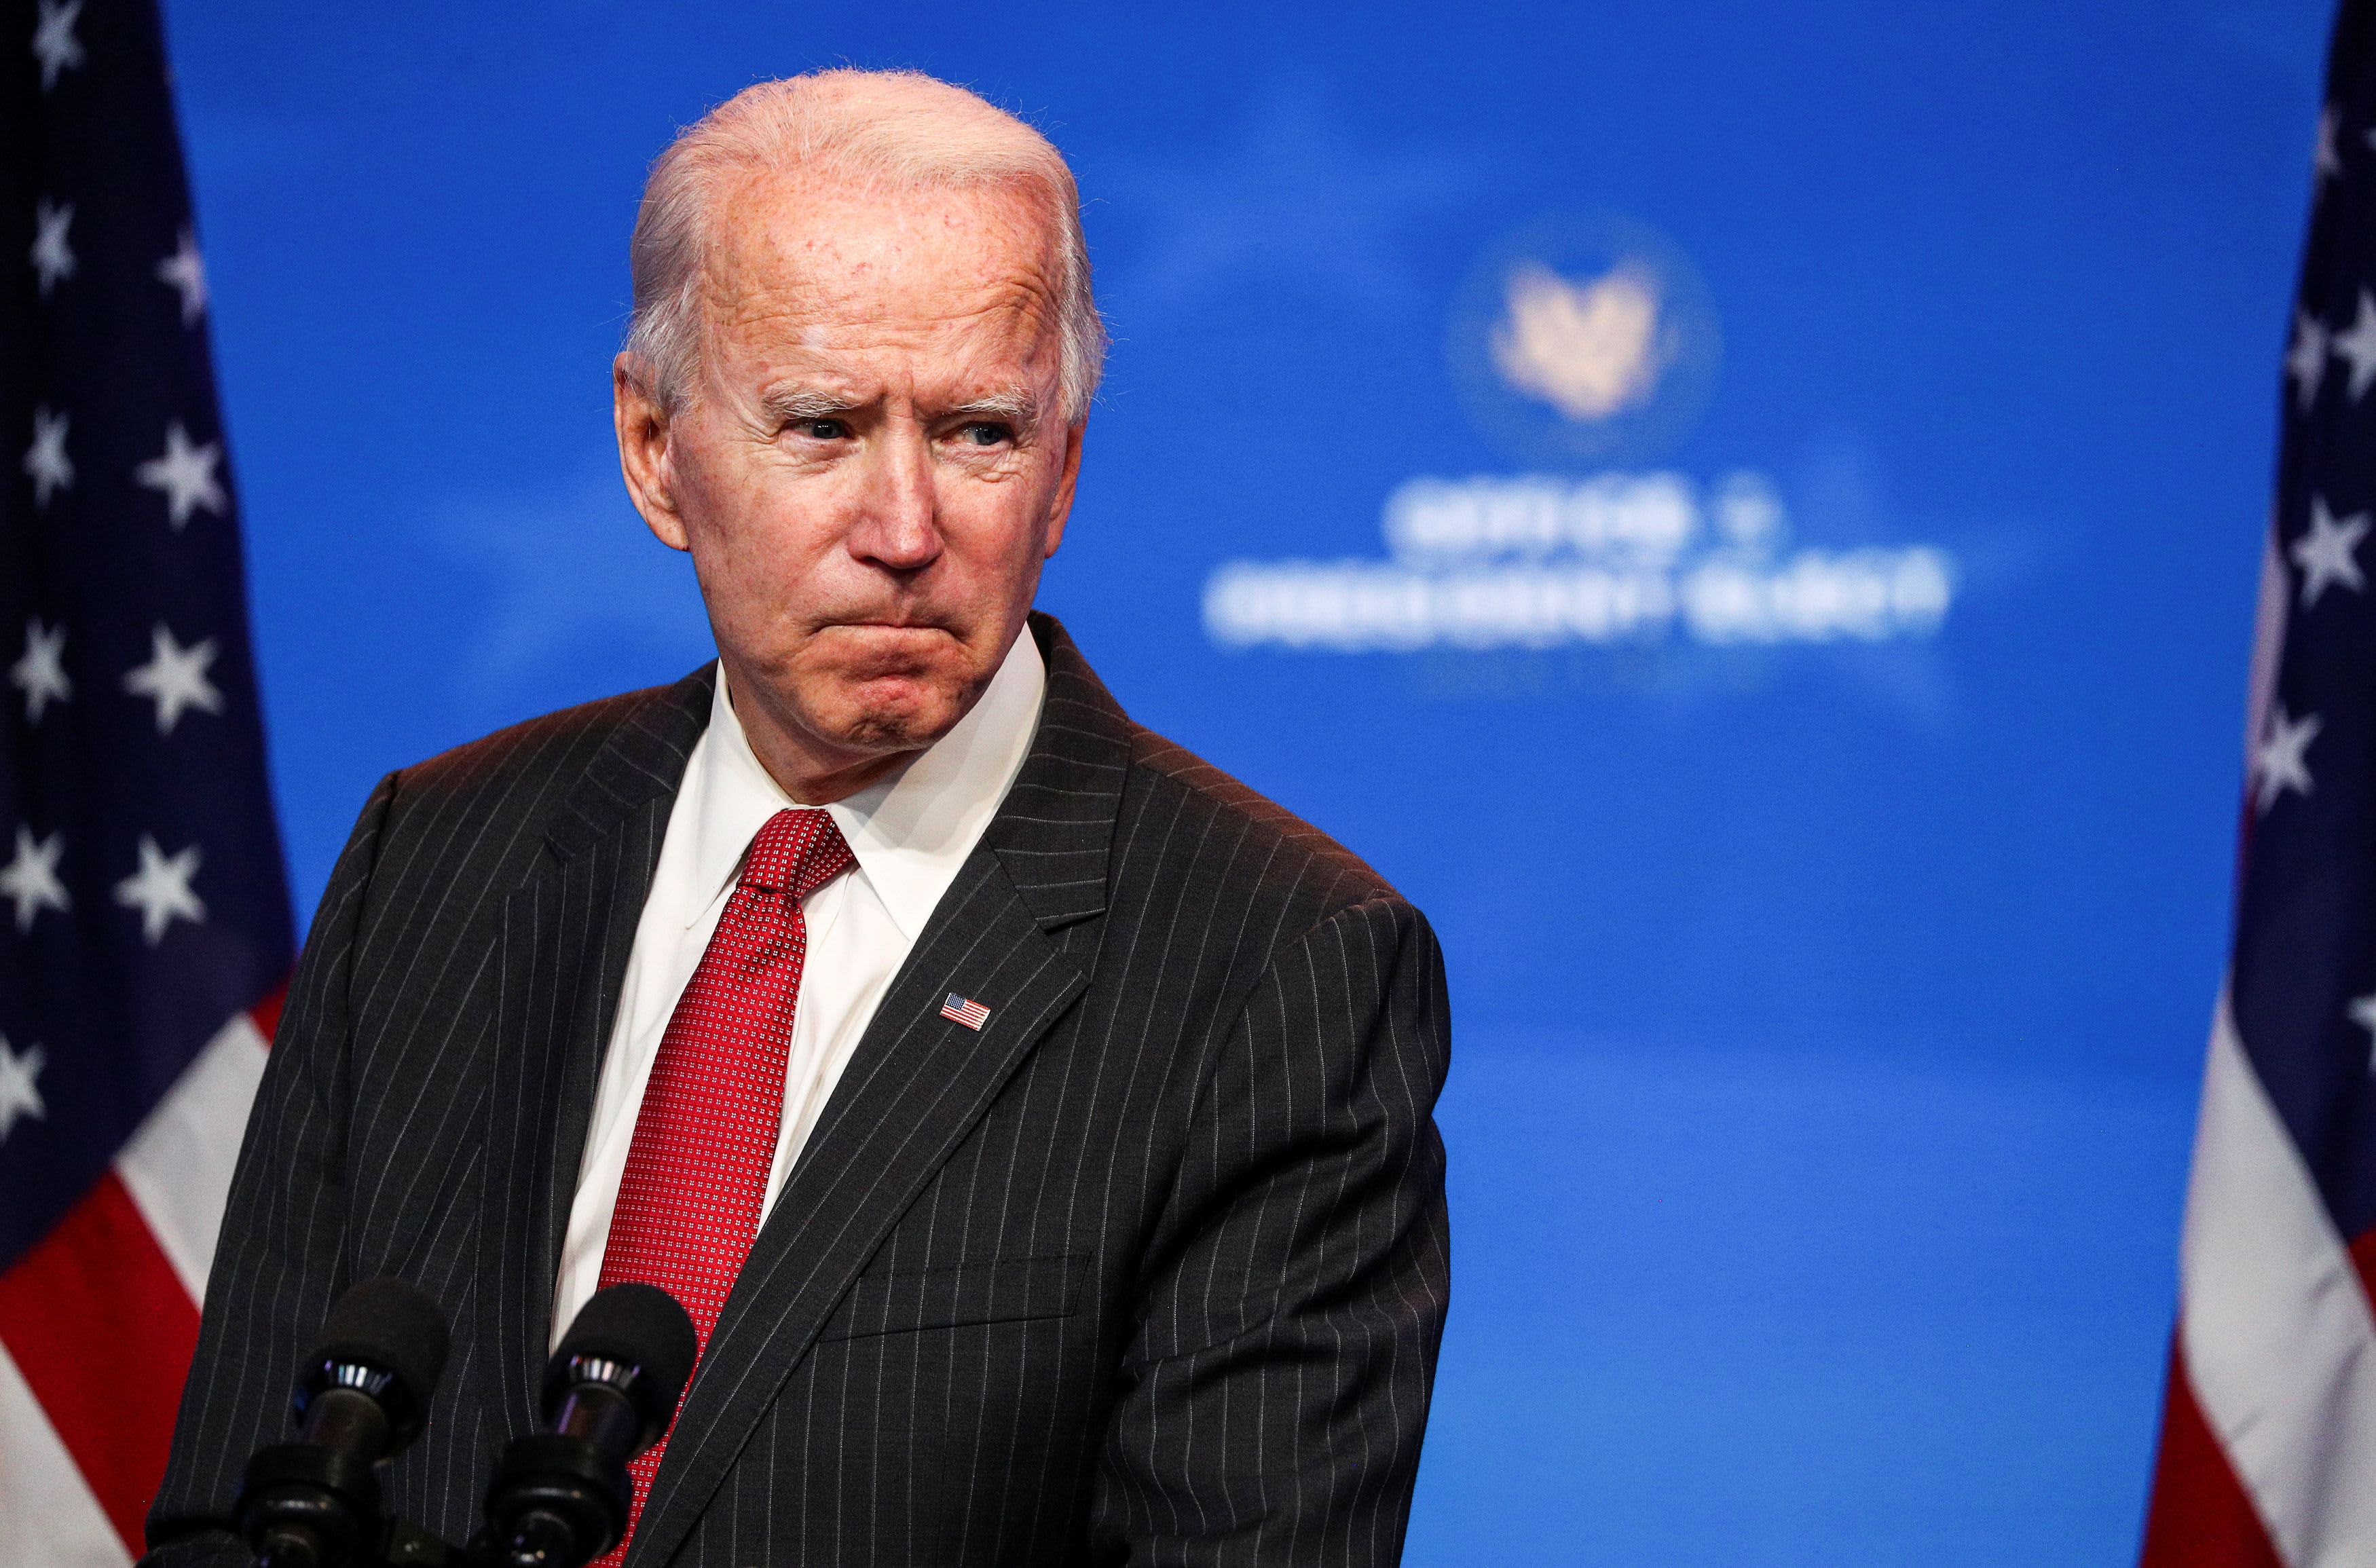 Joe Biden made his pick for Treasury secretary, says he will announce choice soon - CNBC